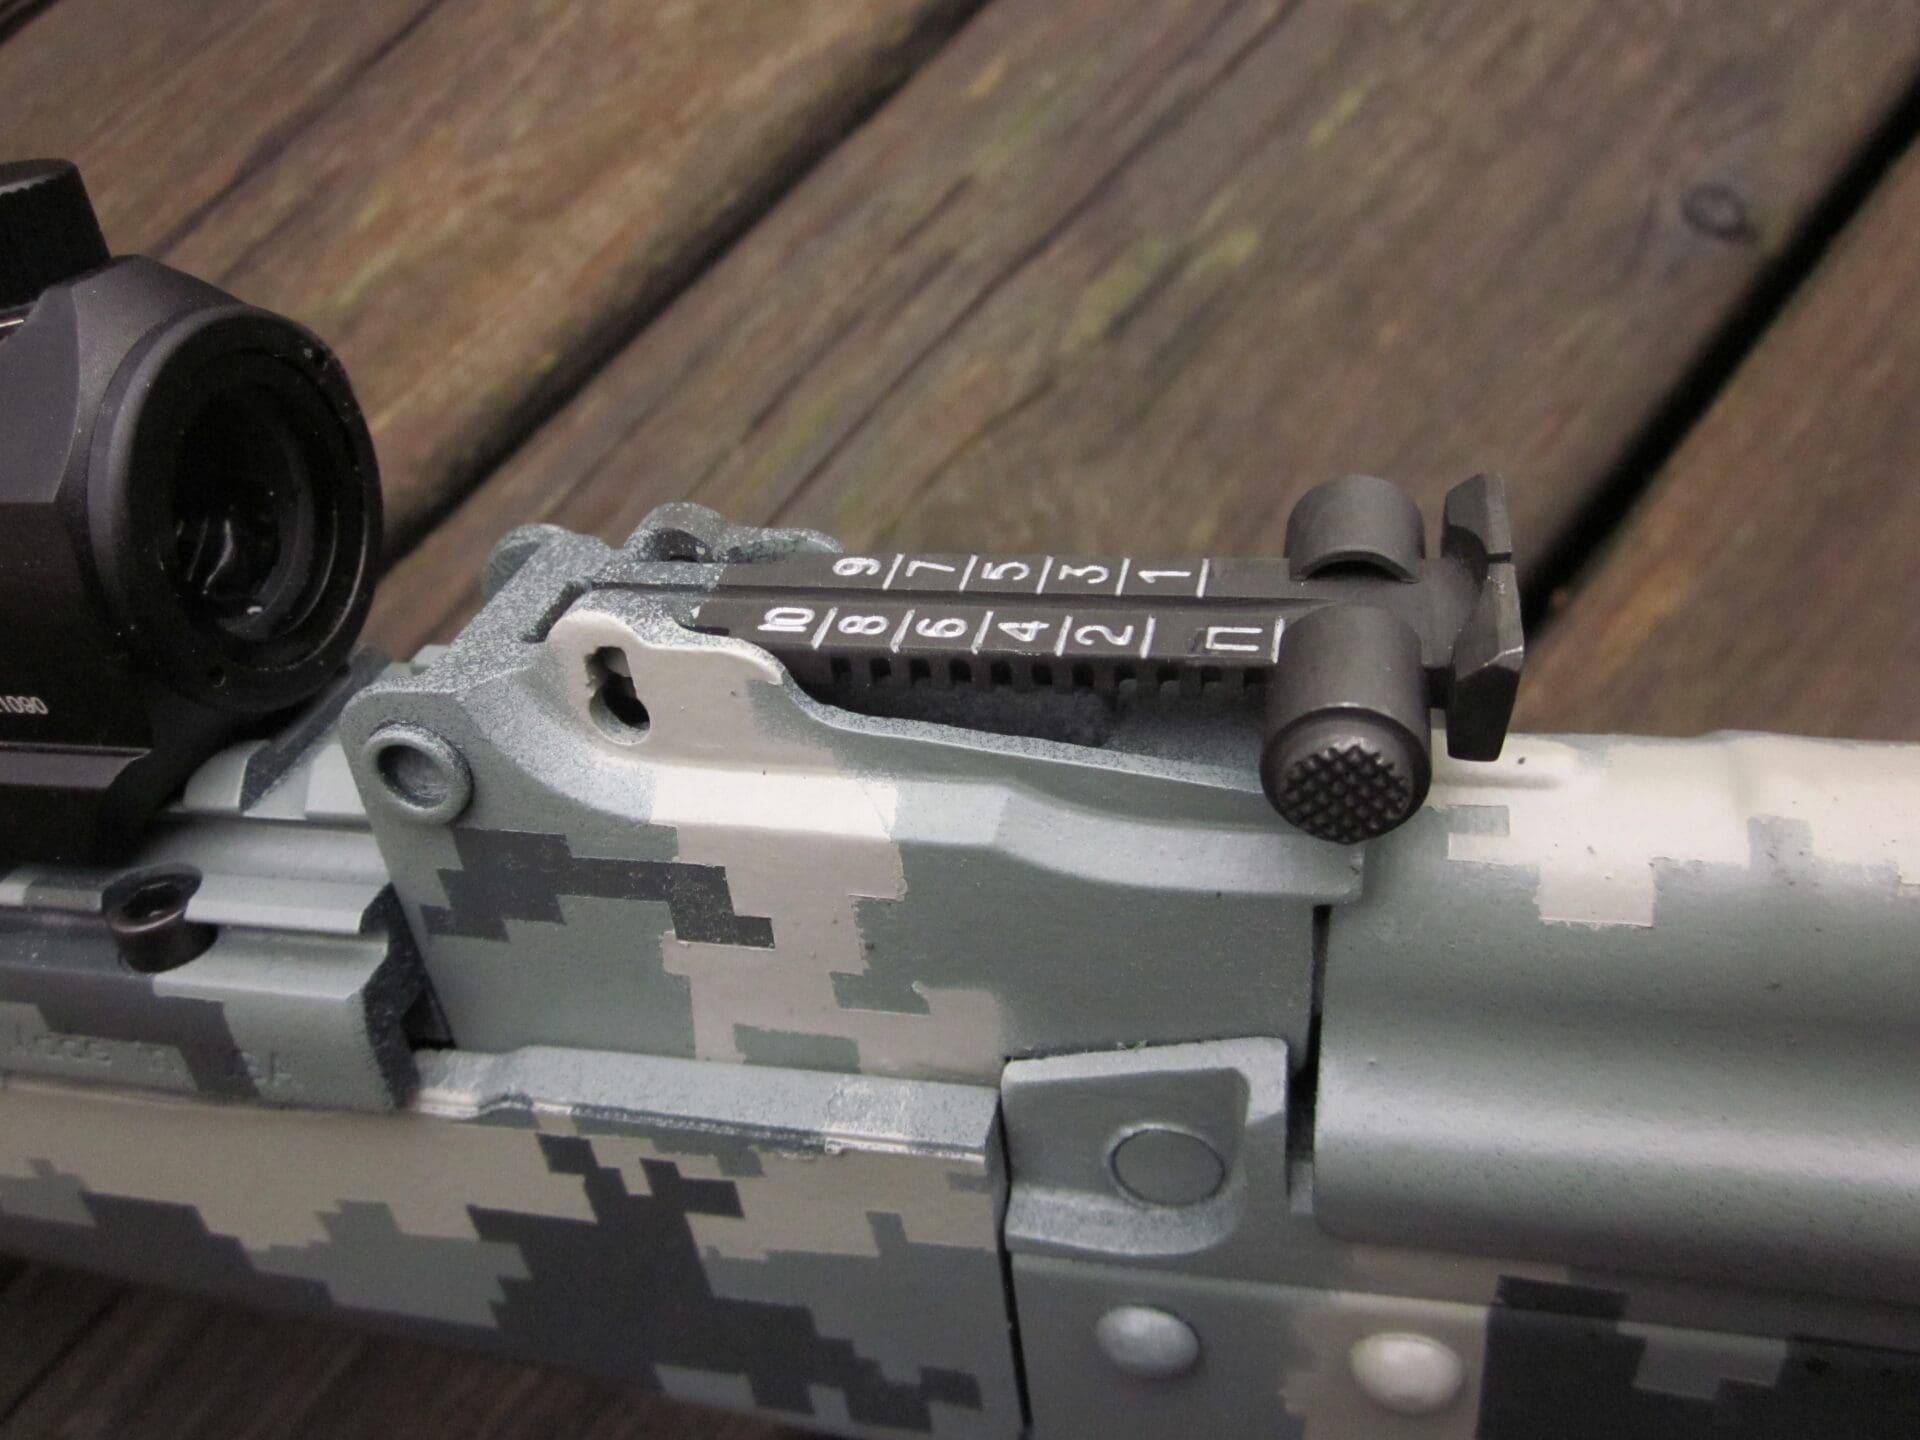 duracoat sniper gray